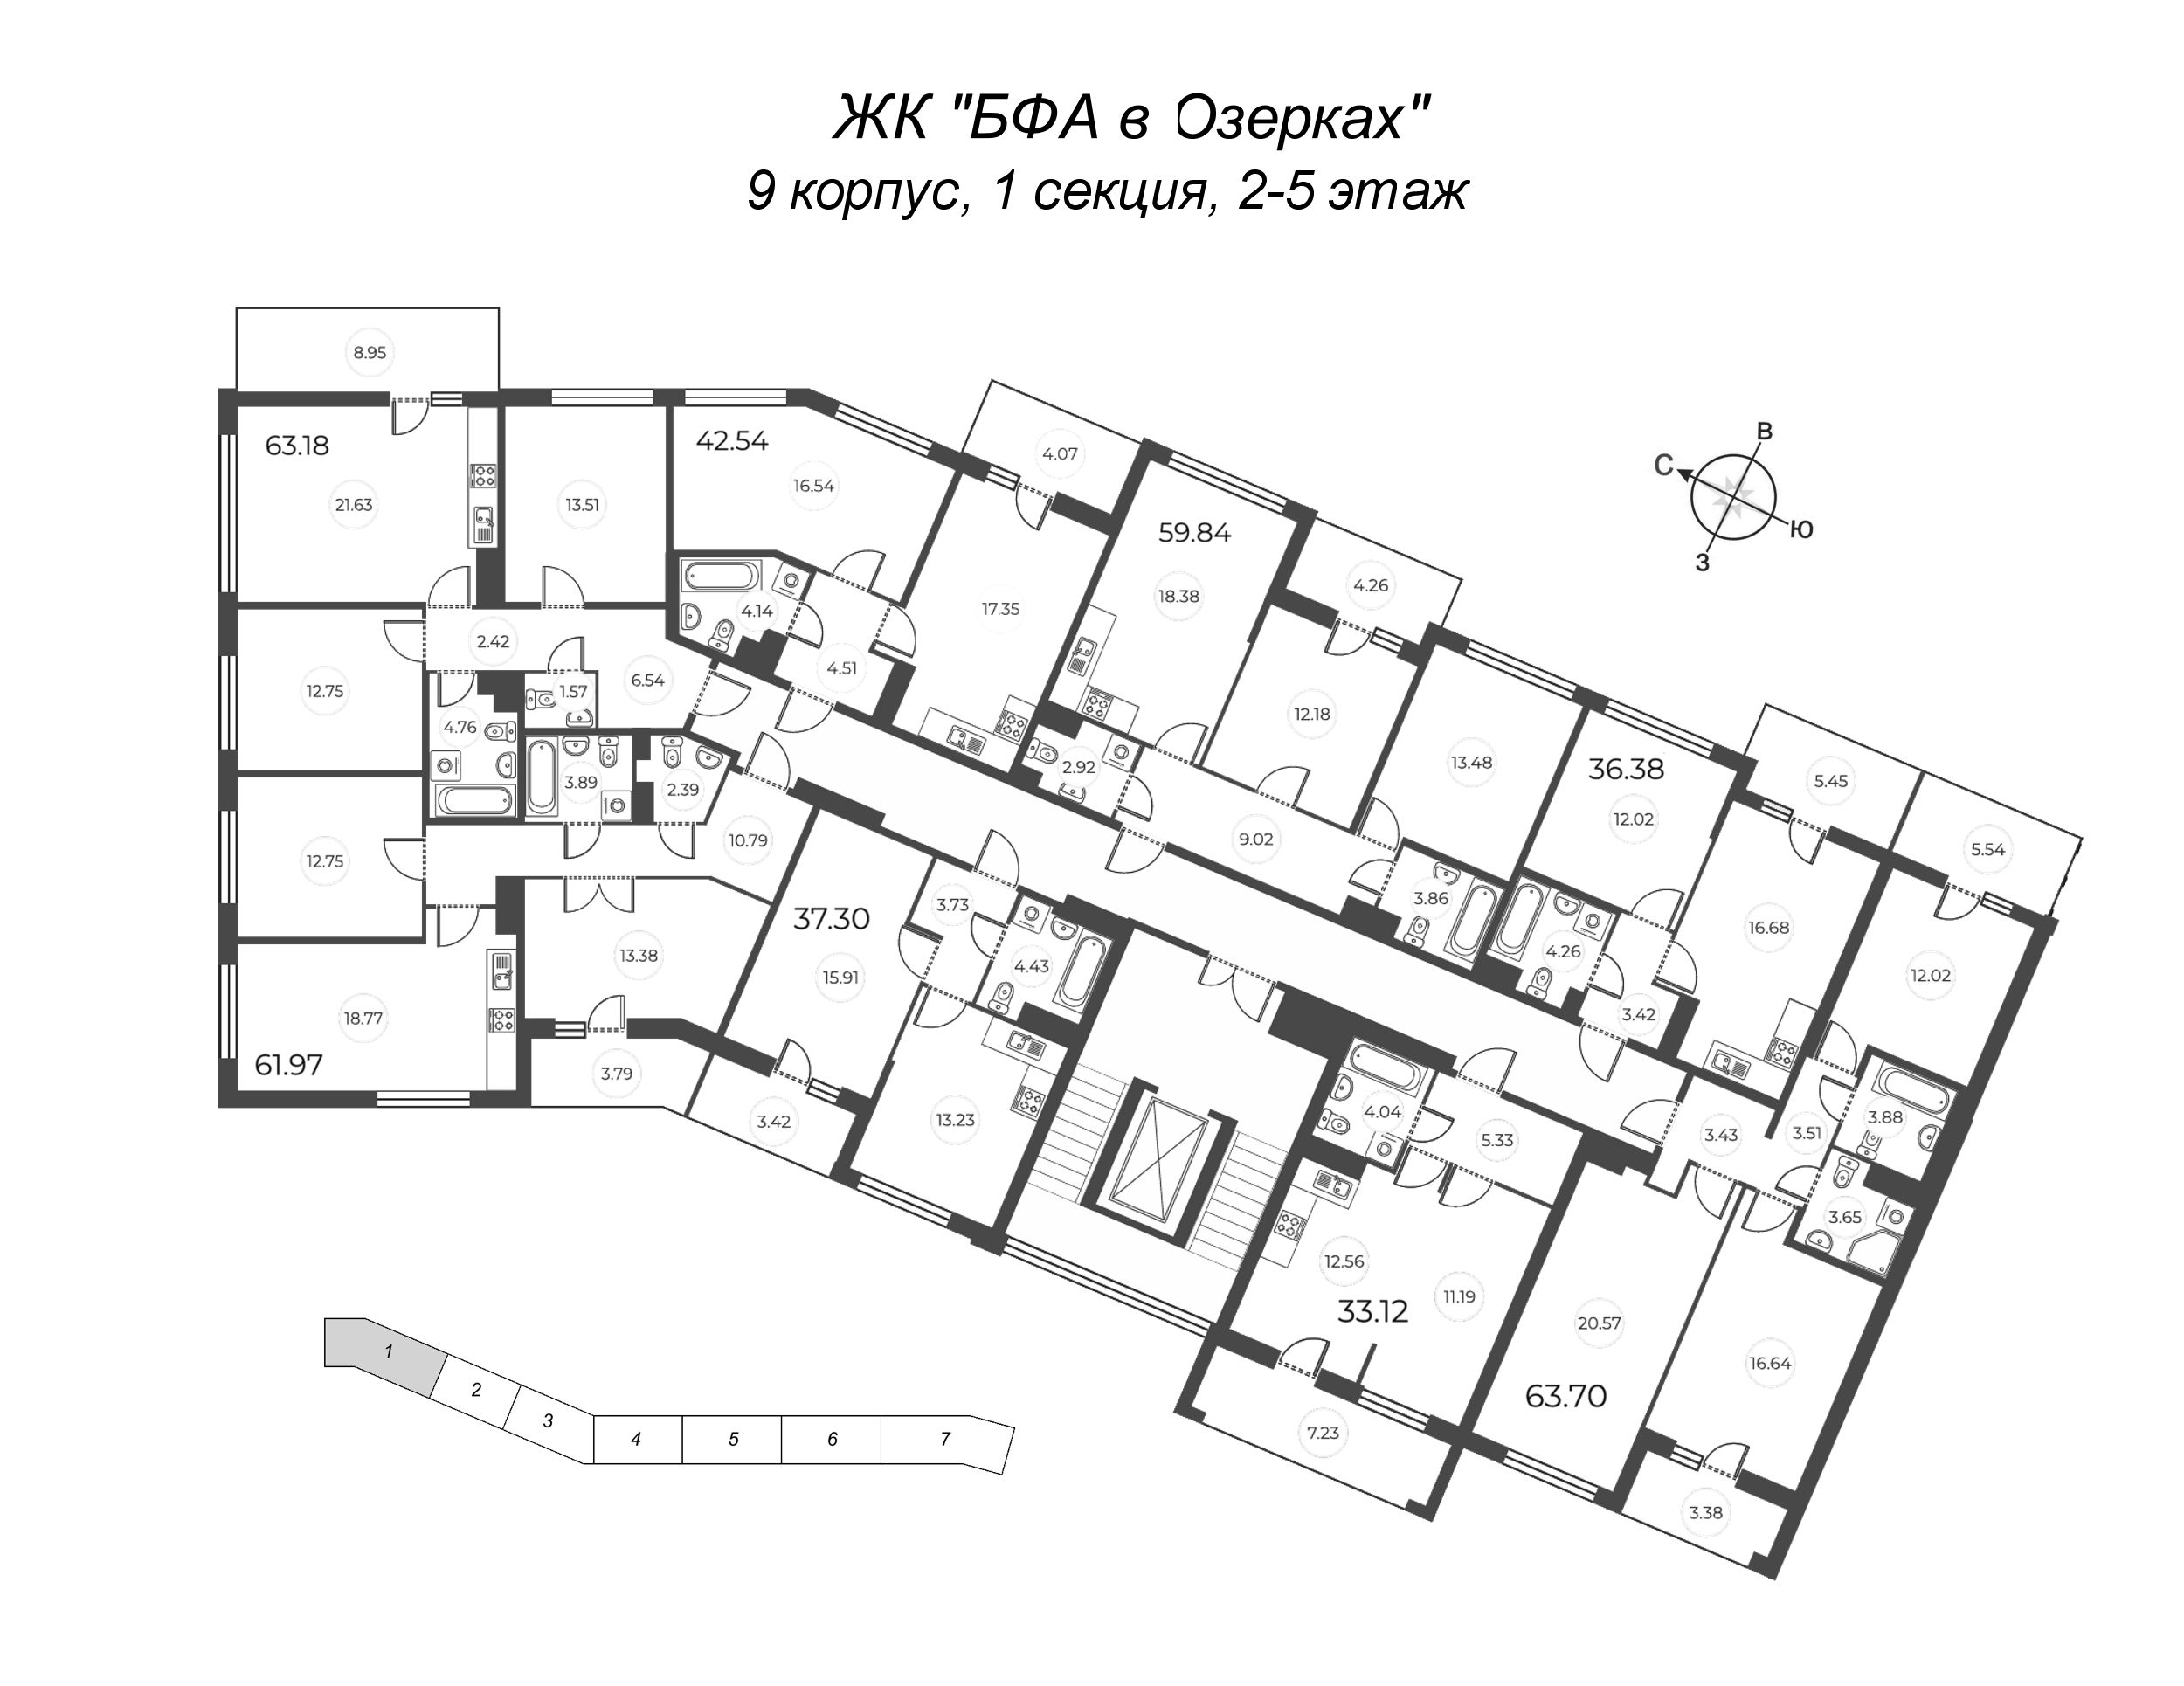 3-комнатная (Евро) квартира, 61.97 м² - планировка этажа